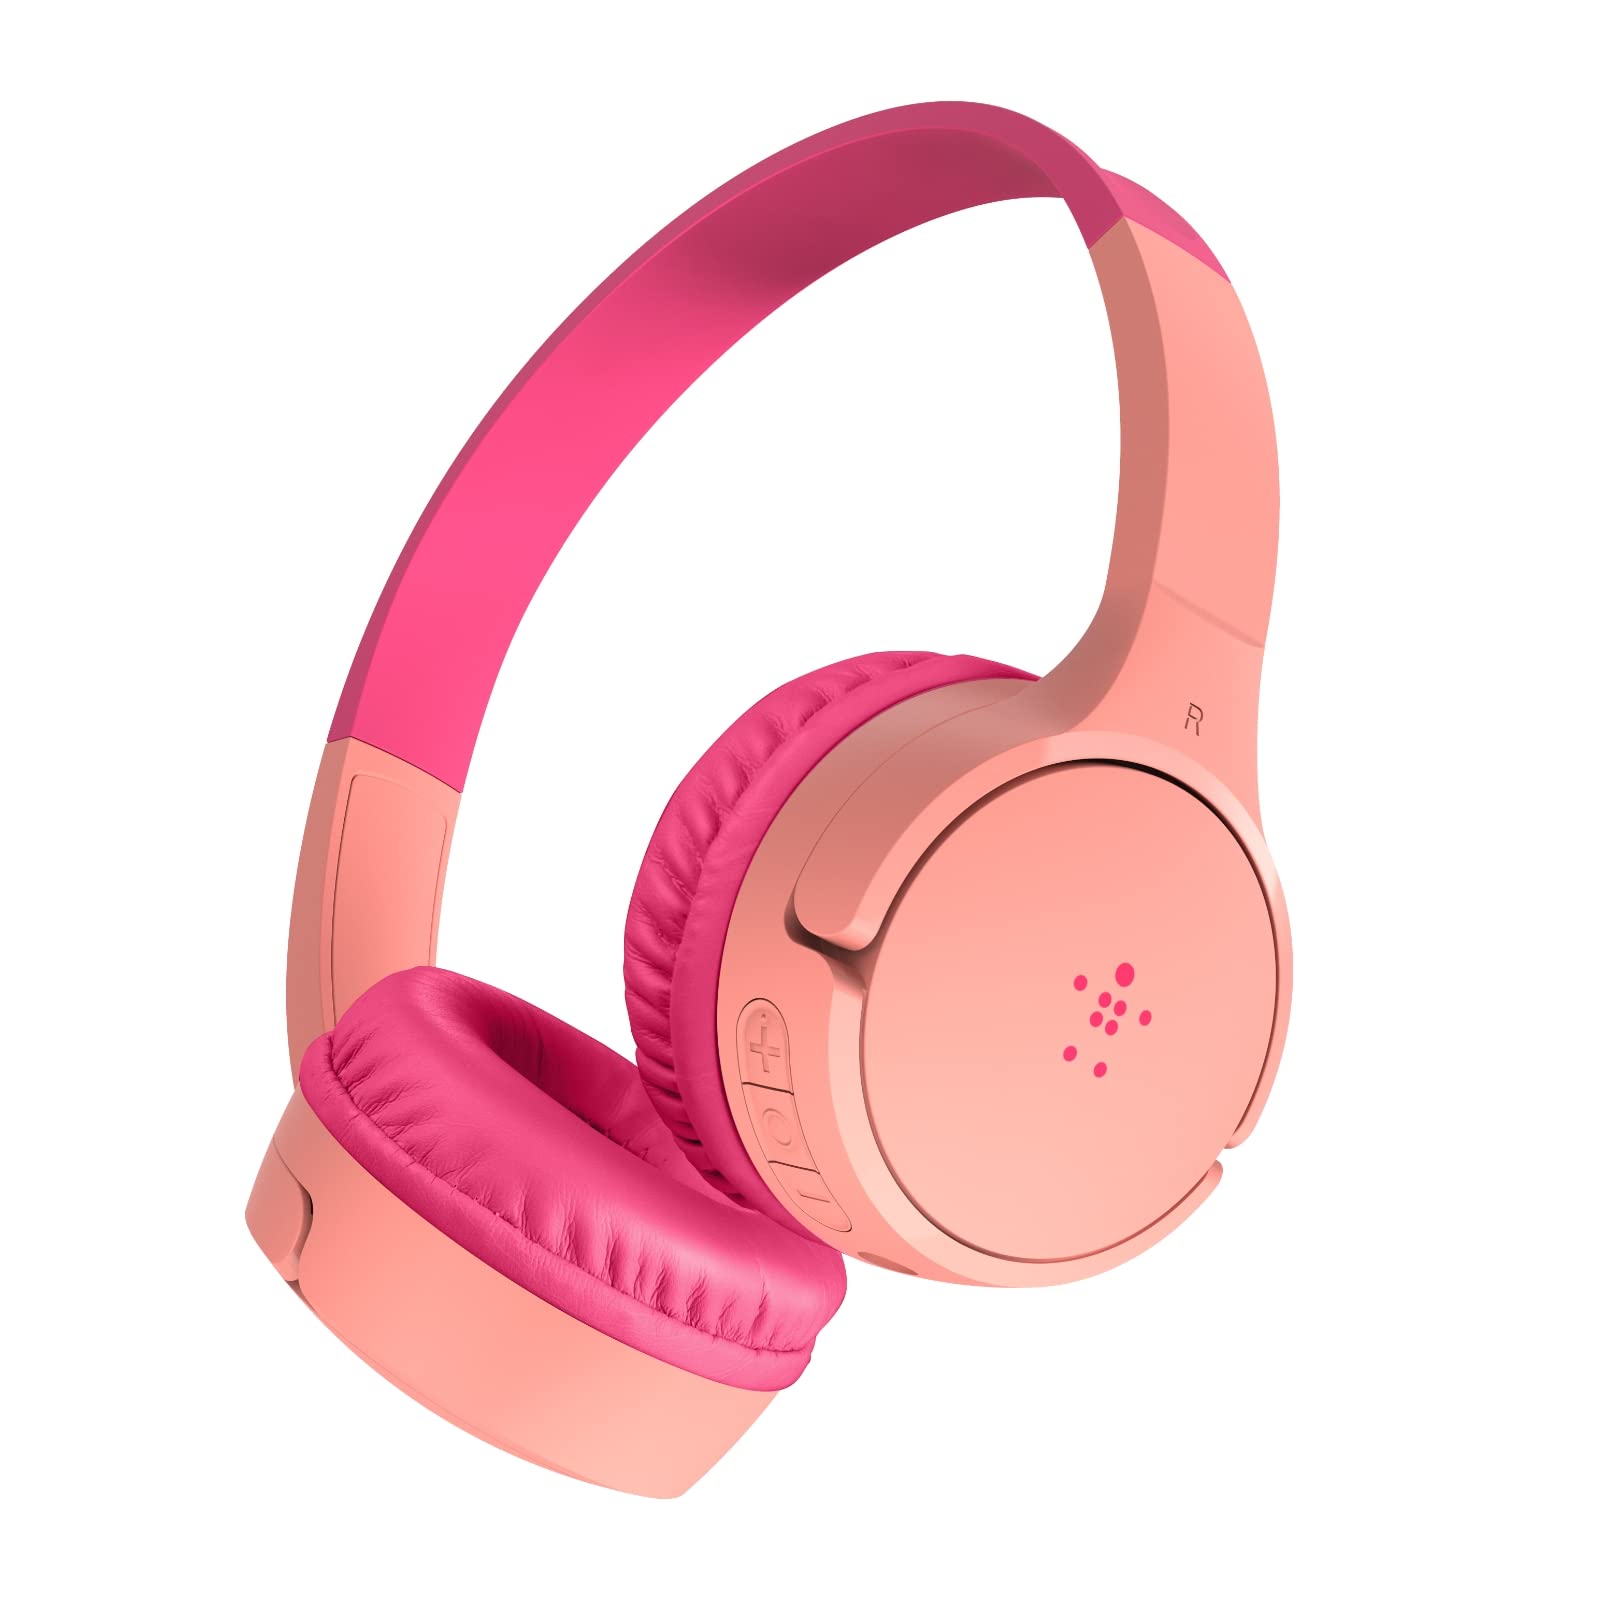 Belkin SoundForm Mini - マイク内蔵子供用ワイヤレス Bluetooth ヘッドフォン - iPhone、iPad、Fire タブレットなど用オンイヤーイヤホン - ピンク